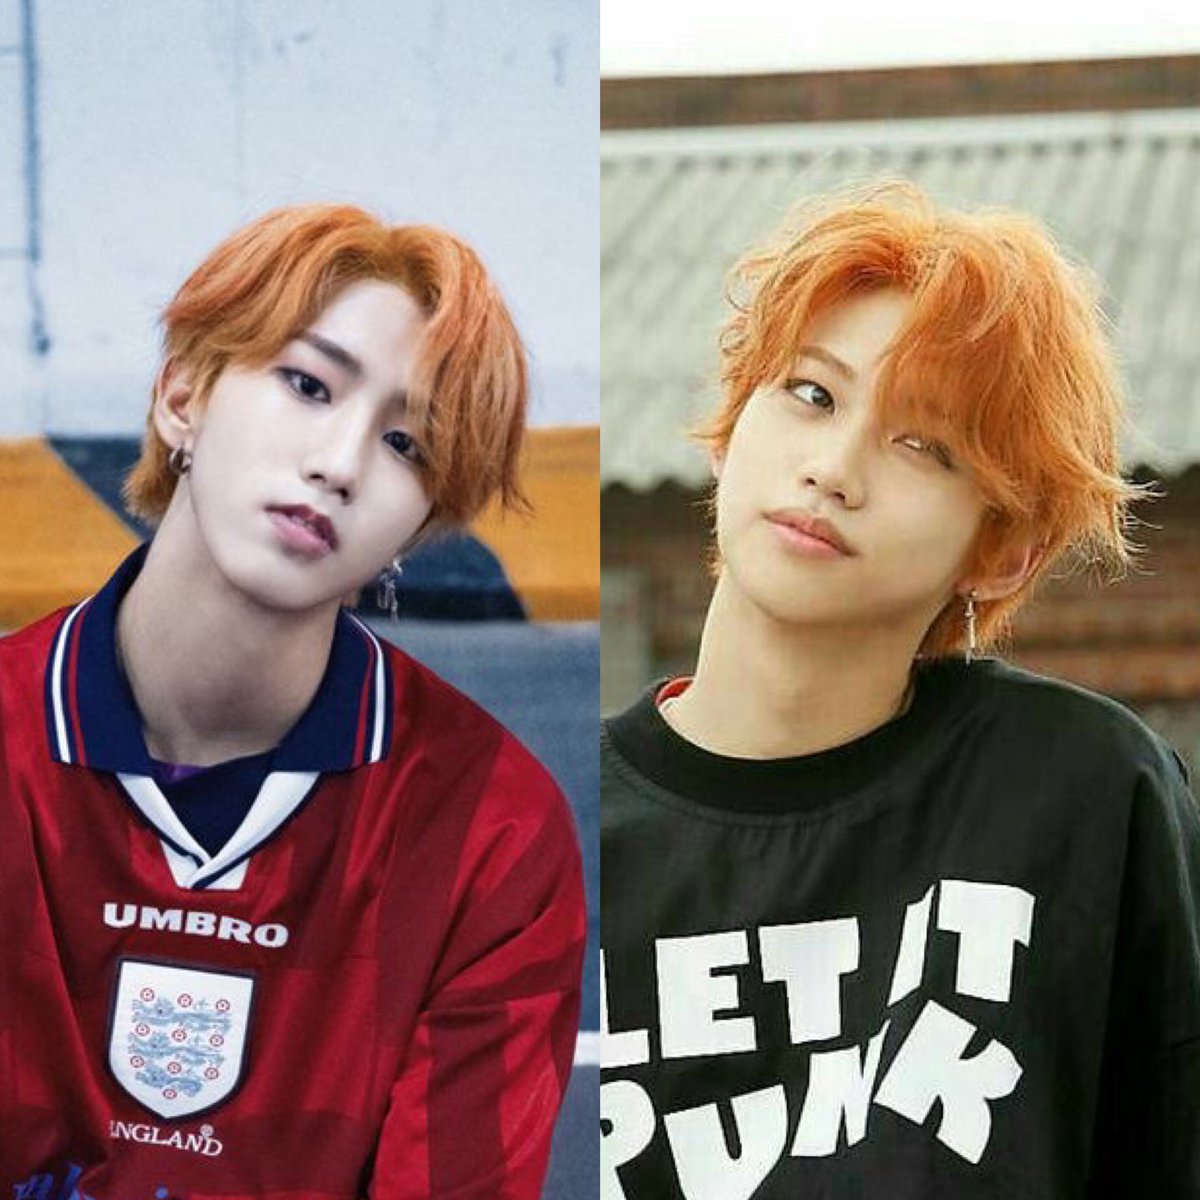 felix             jisung     having the same     hair colors at the       same time